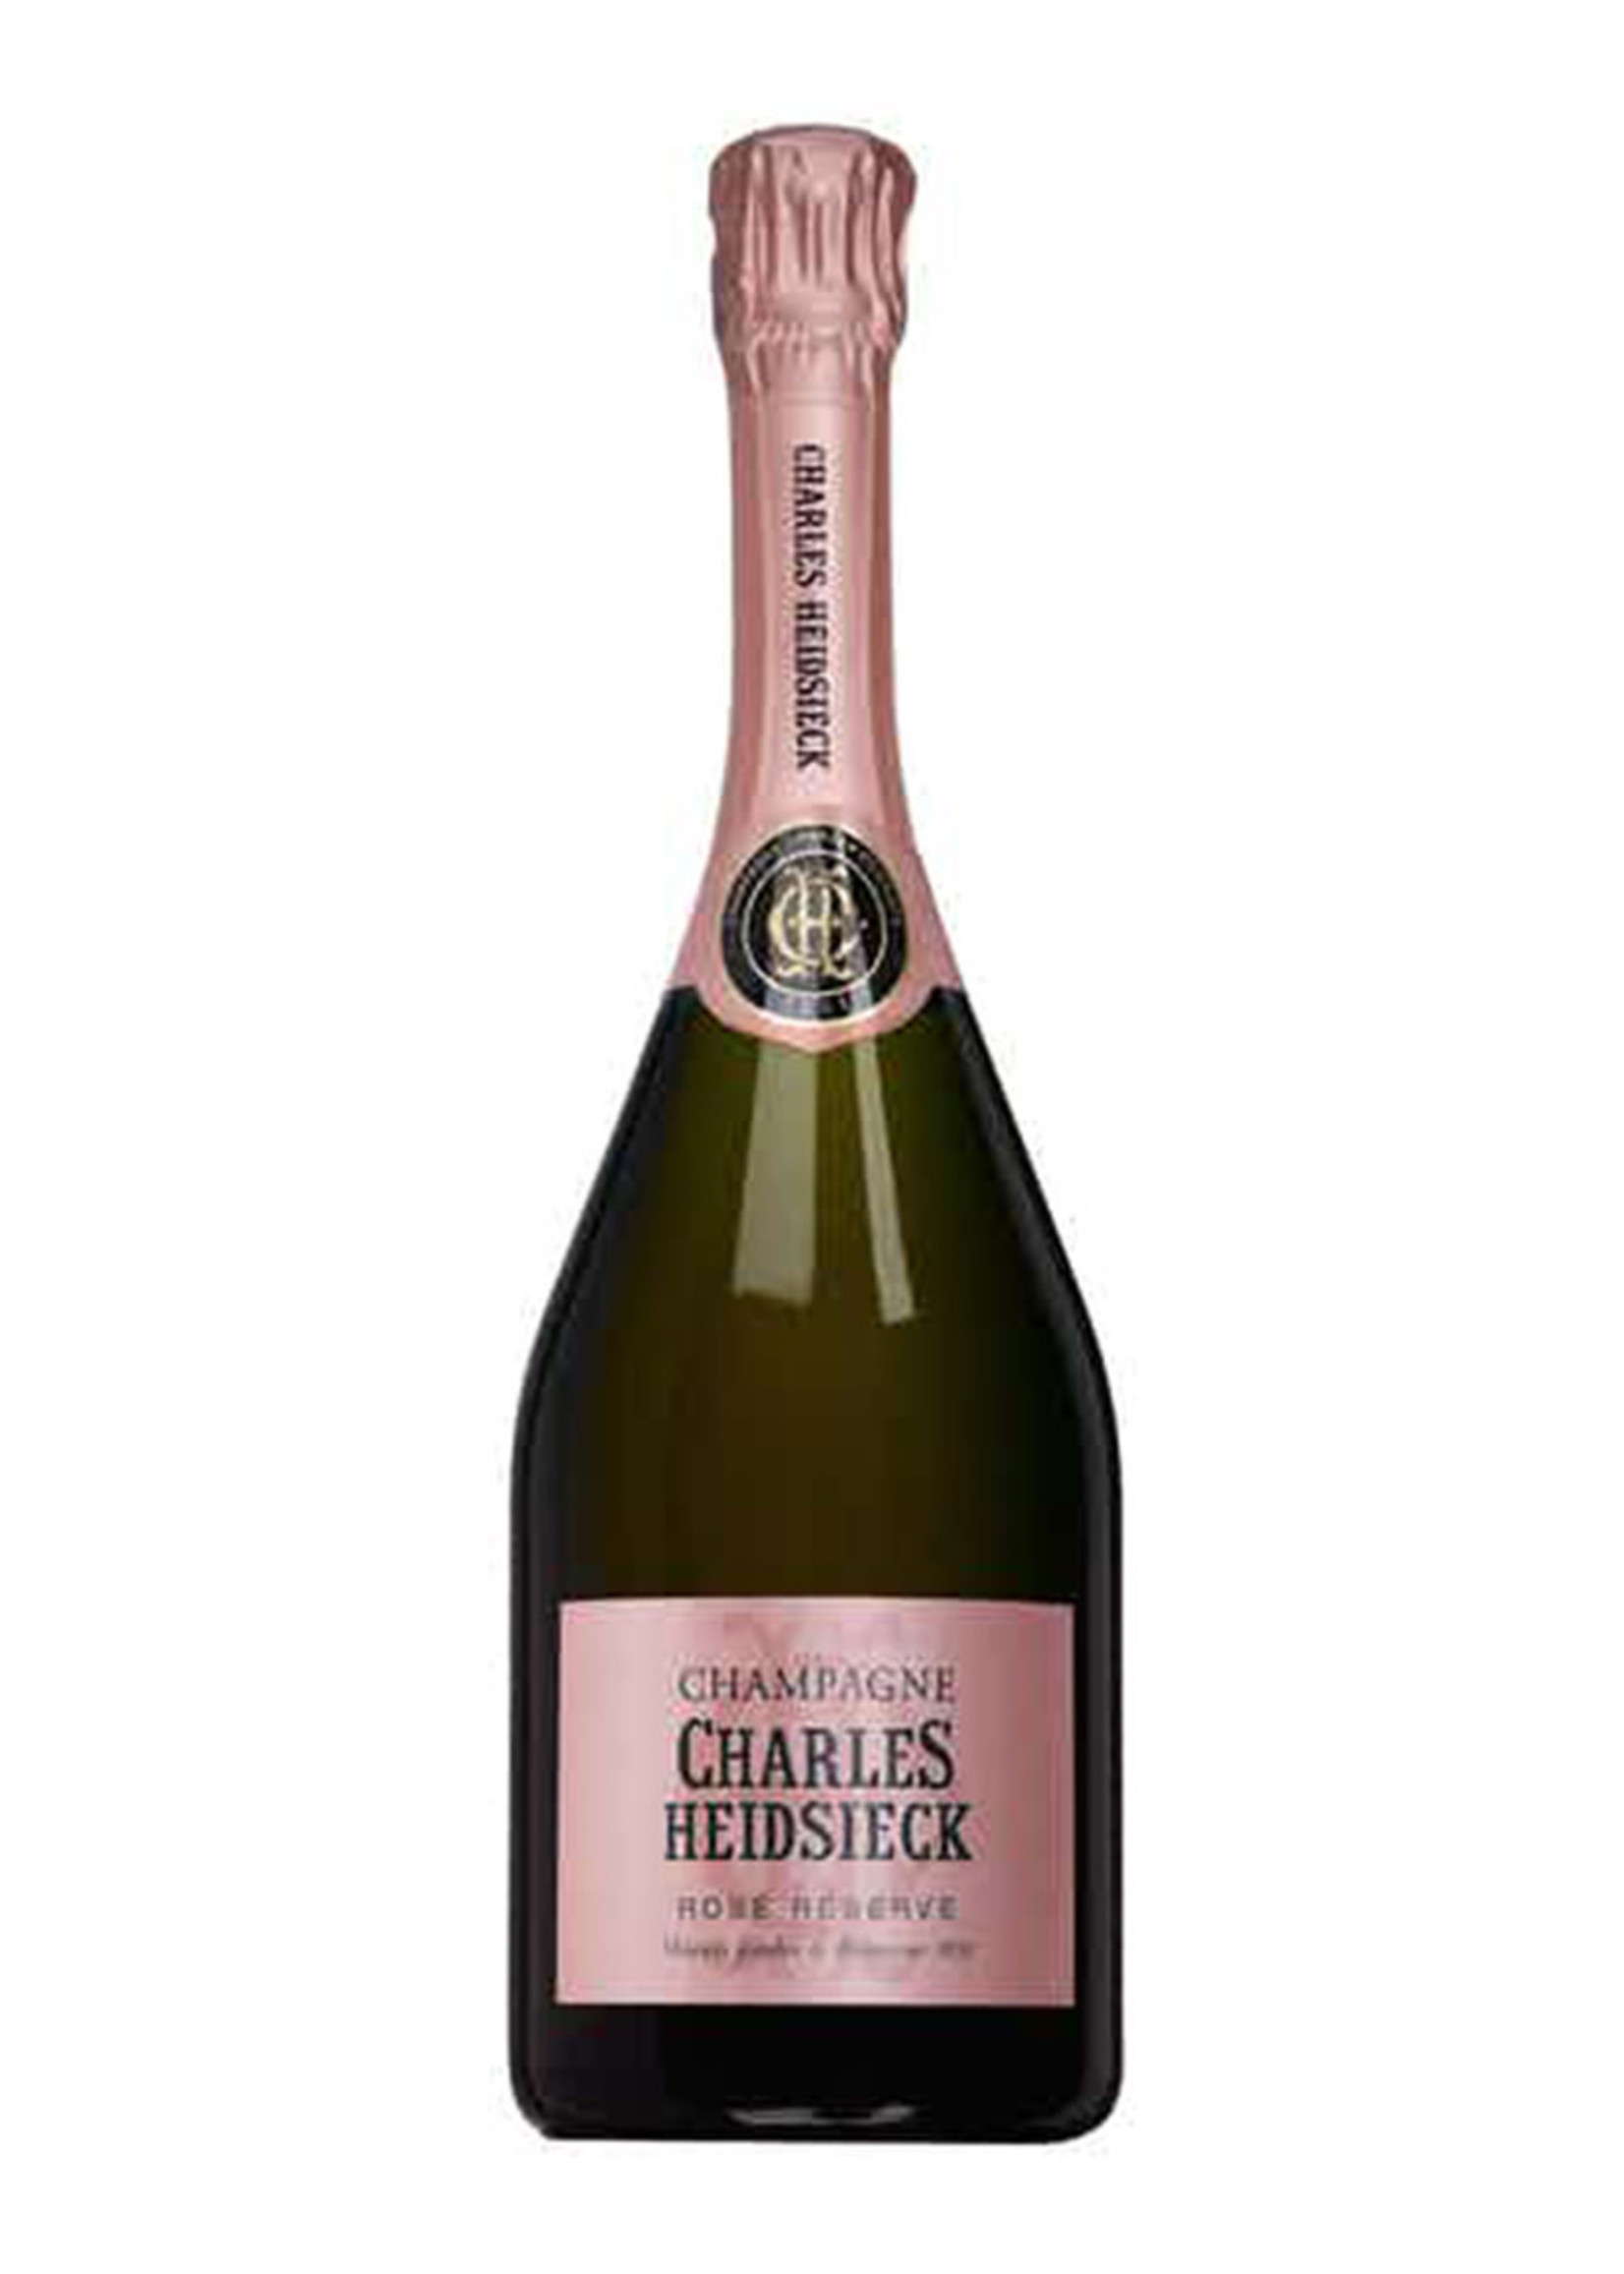 Charles Heidsieck Brut Rosé Réserve, Champagne, France